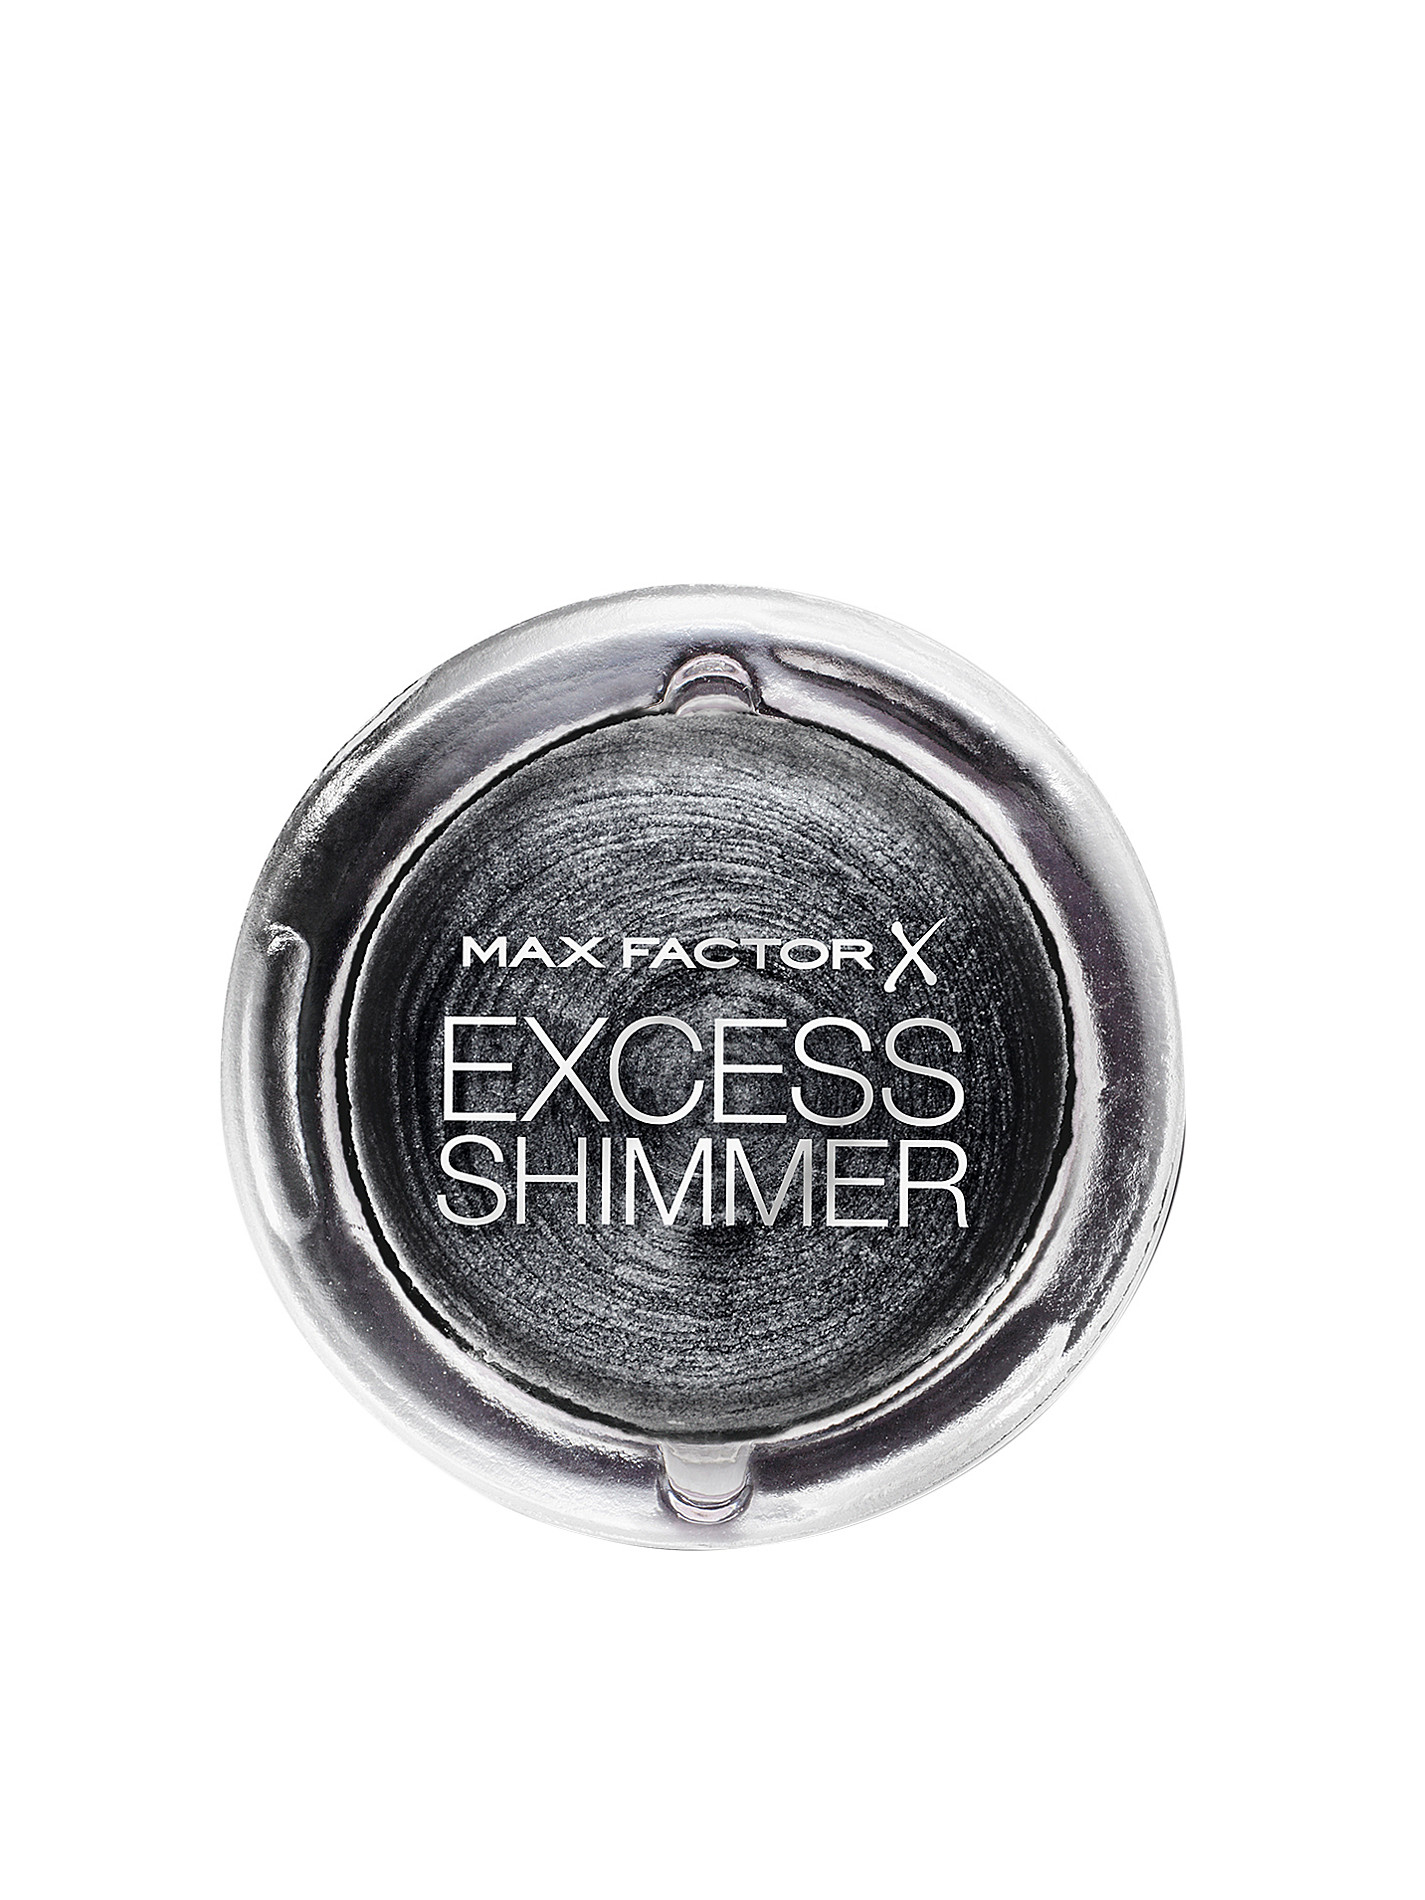 max factor excess shimmer 3.jpg